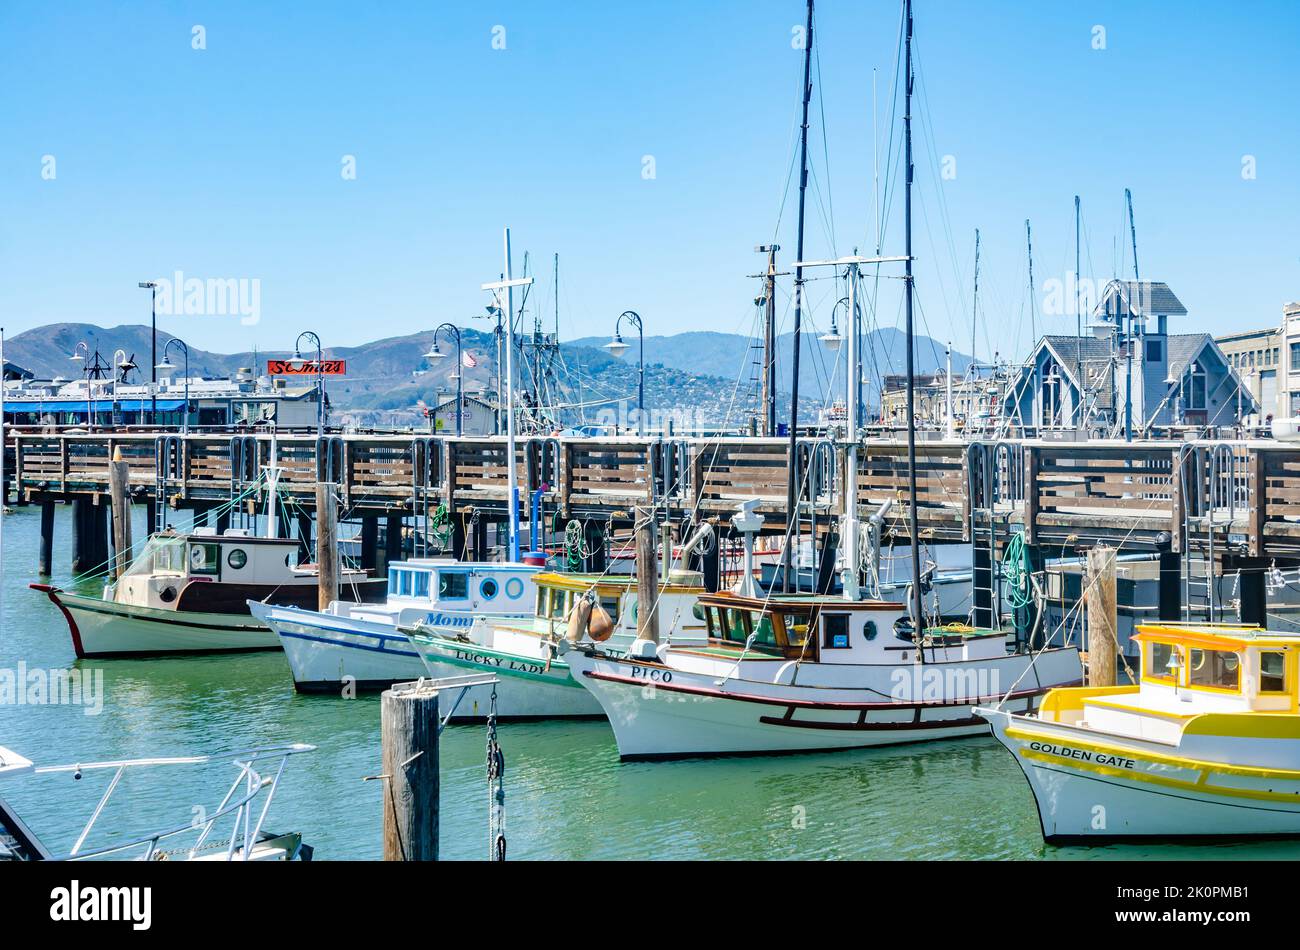 Pleasure boats moored in the marina at Pier 45 alongside Jefferson Street in San Francisco, California Stock Photo